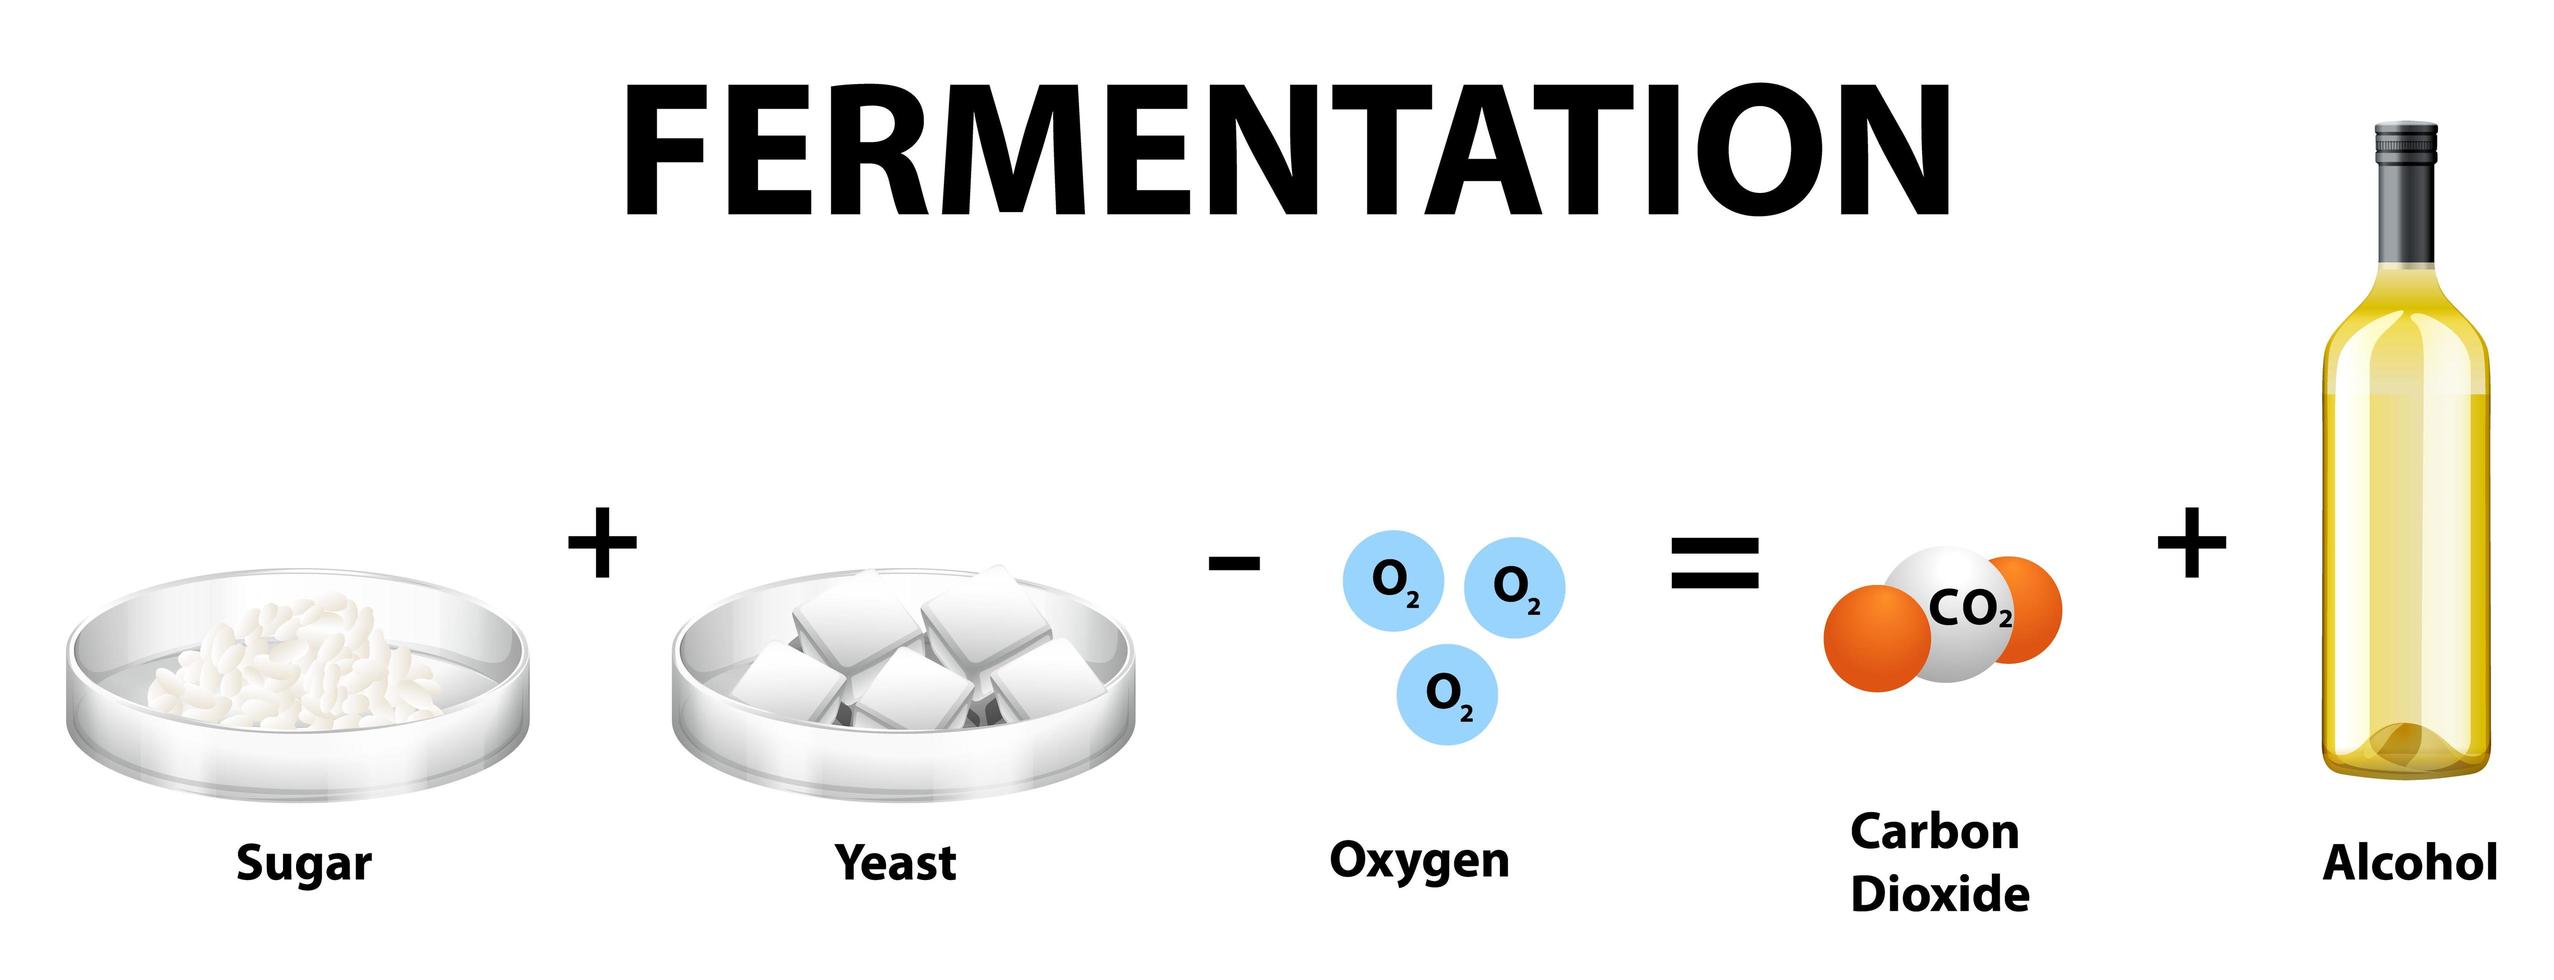 Alcoholic fermentation chemical equation vector